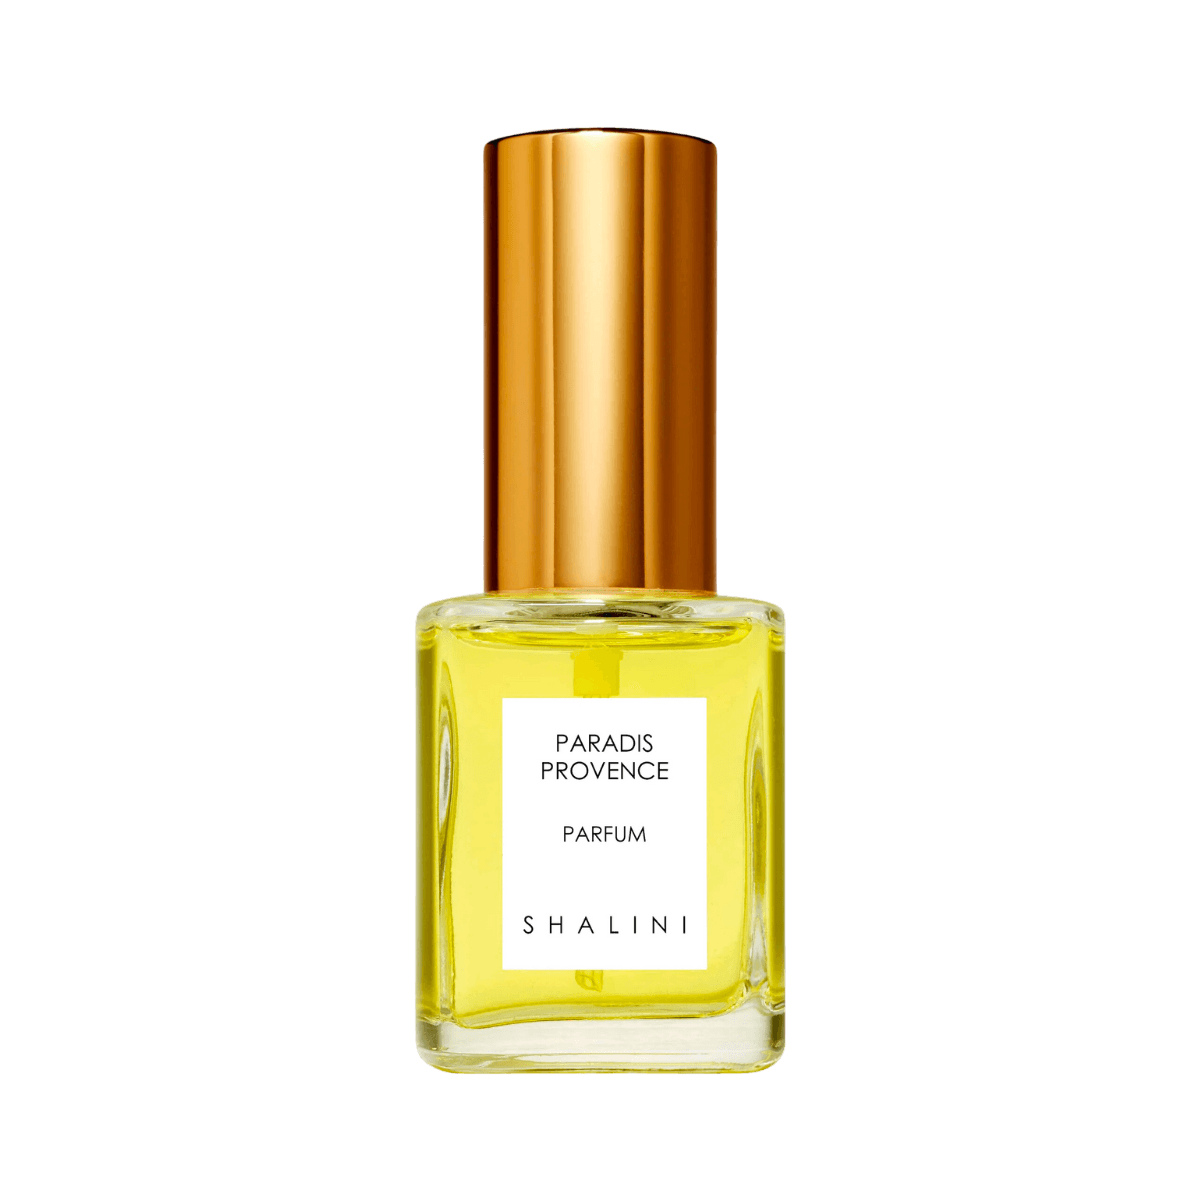 Image of Paradis Provence extrait de parfum by the perfume brand Shalini